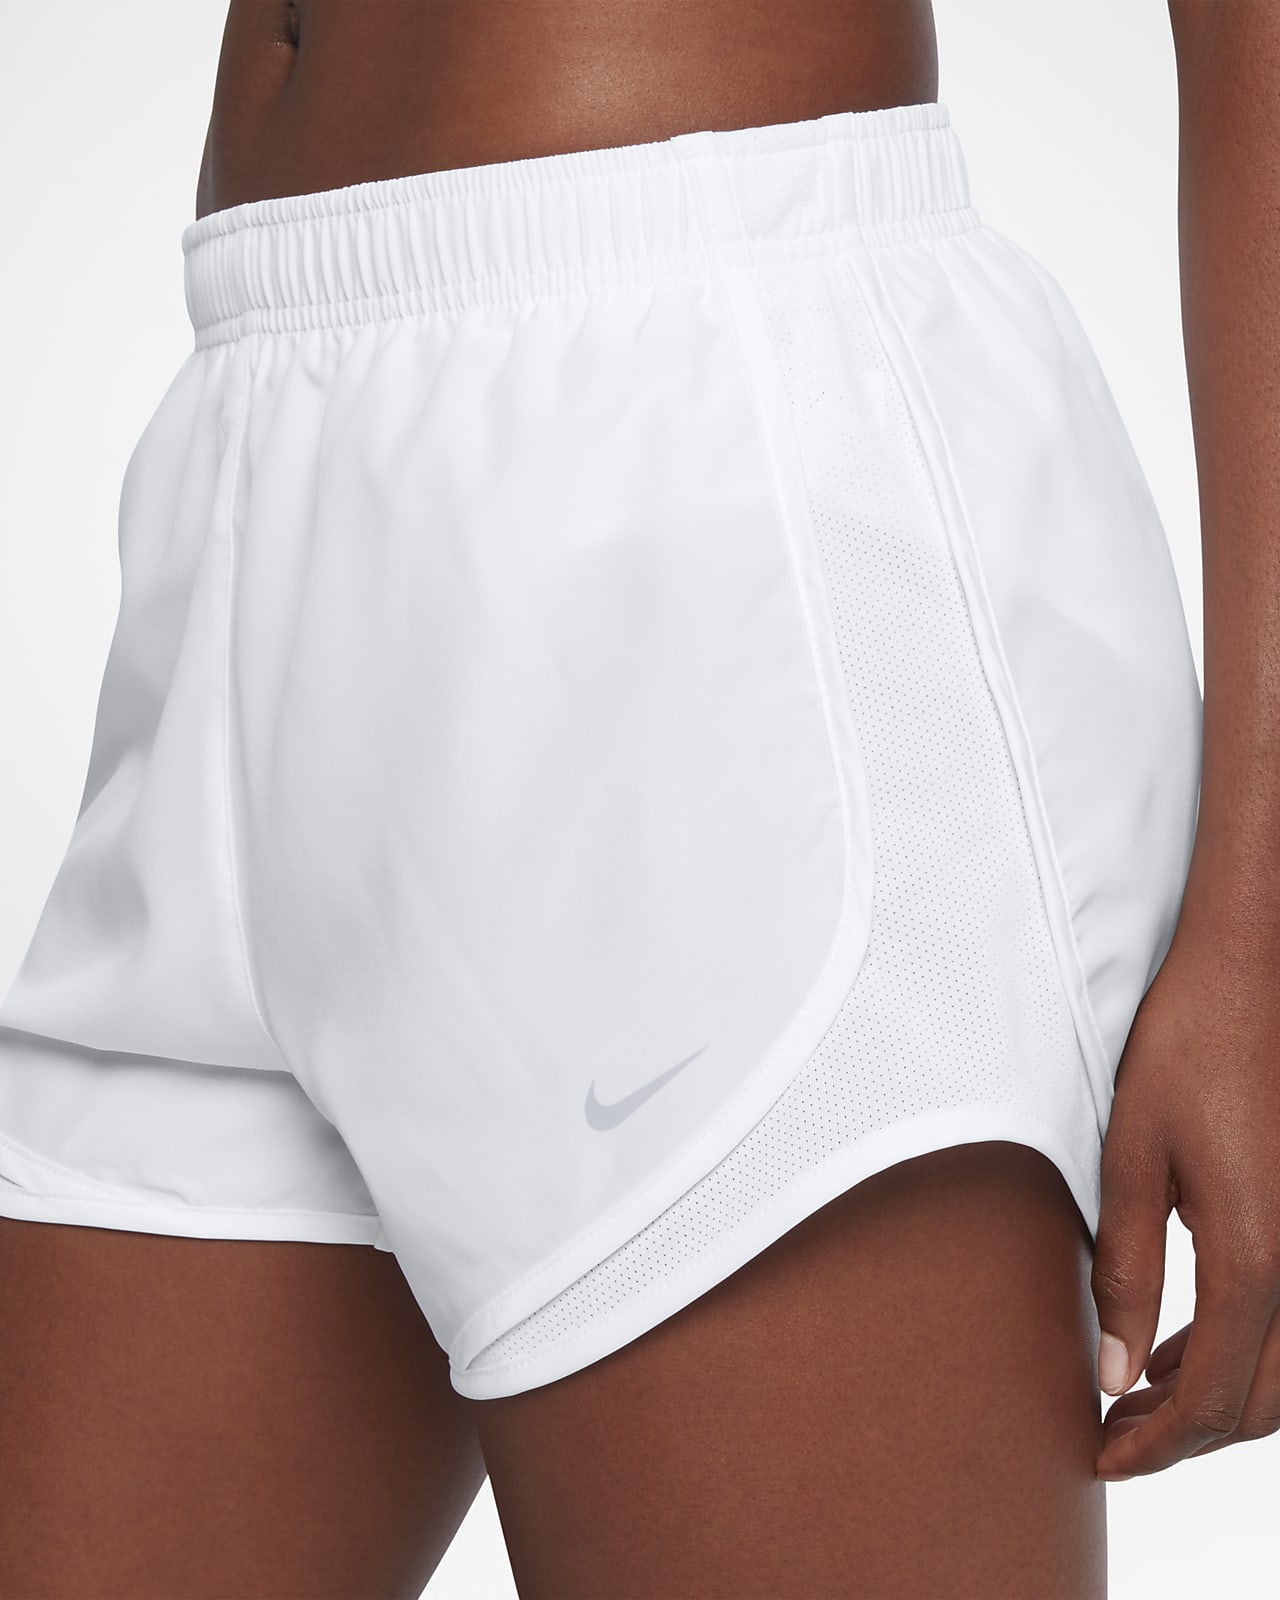 all white nike shorts